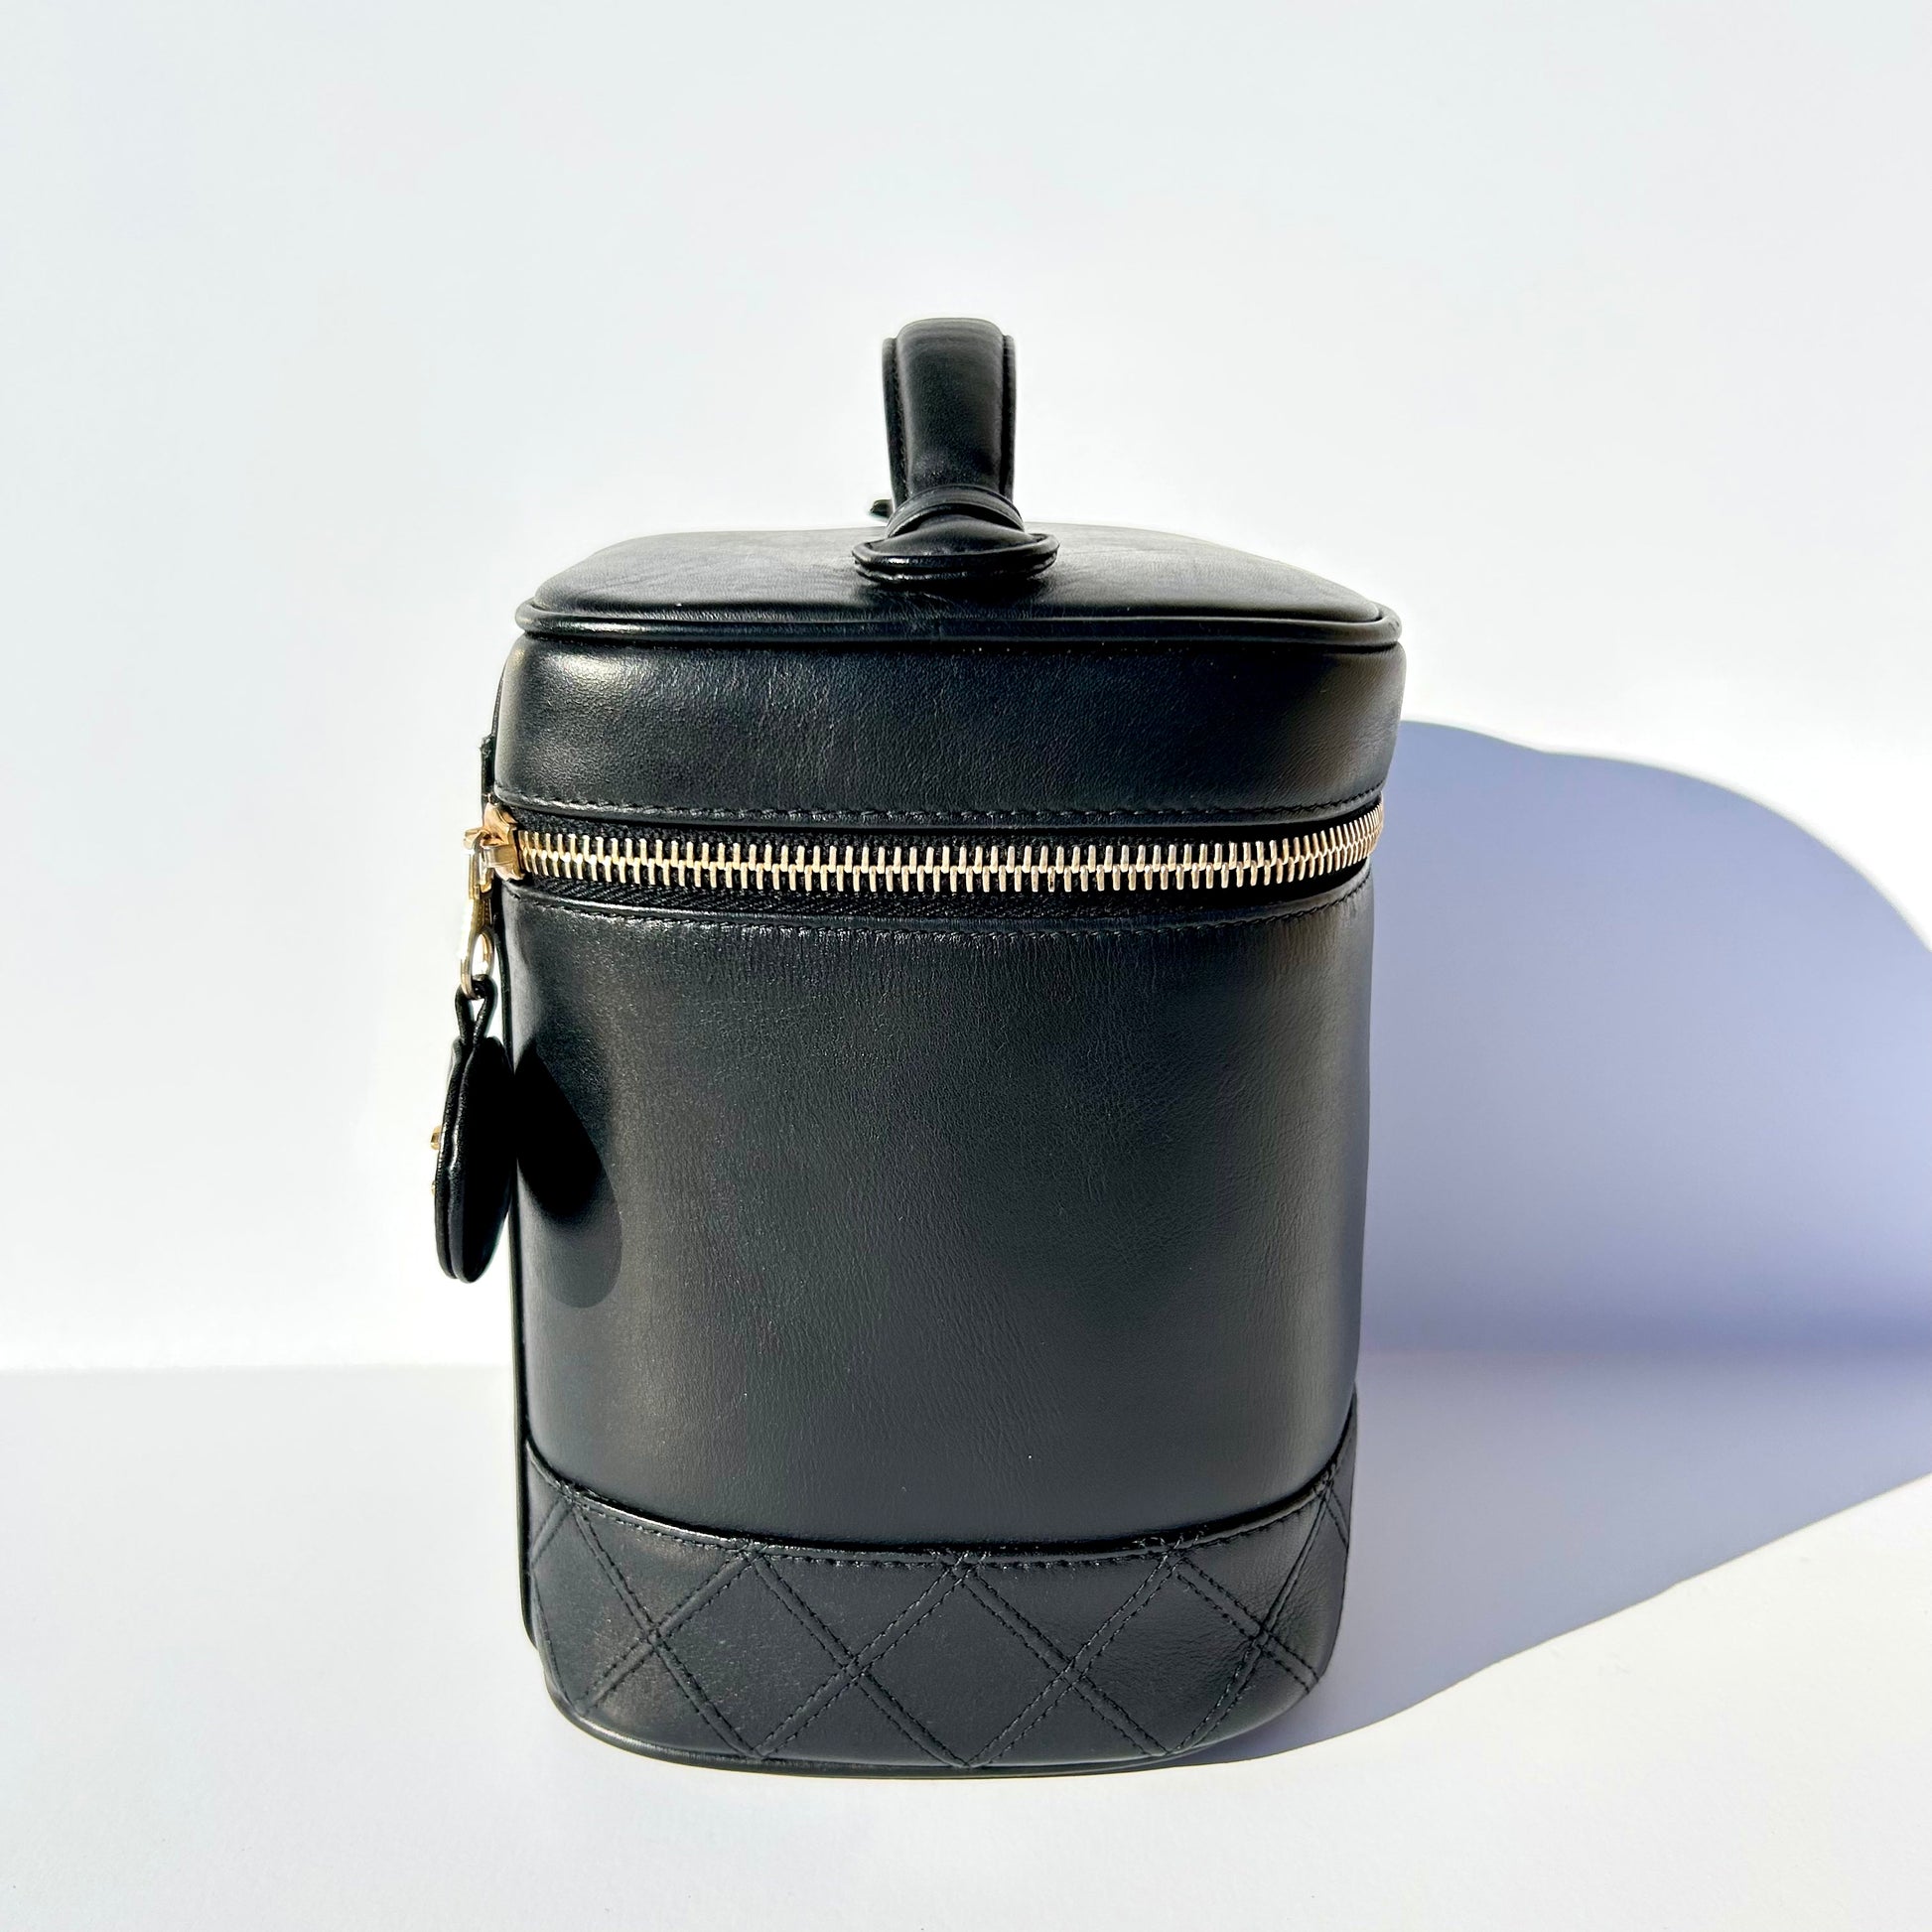 Vintage Chanel Vanity Bag